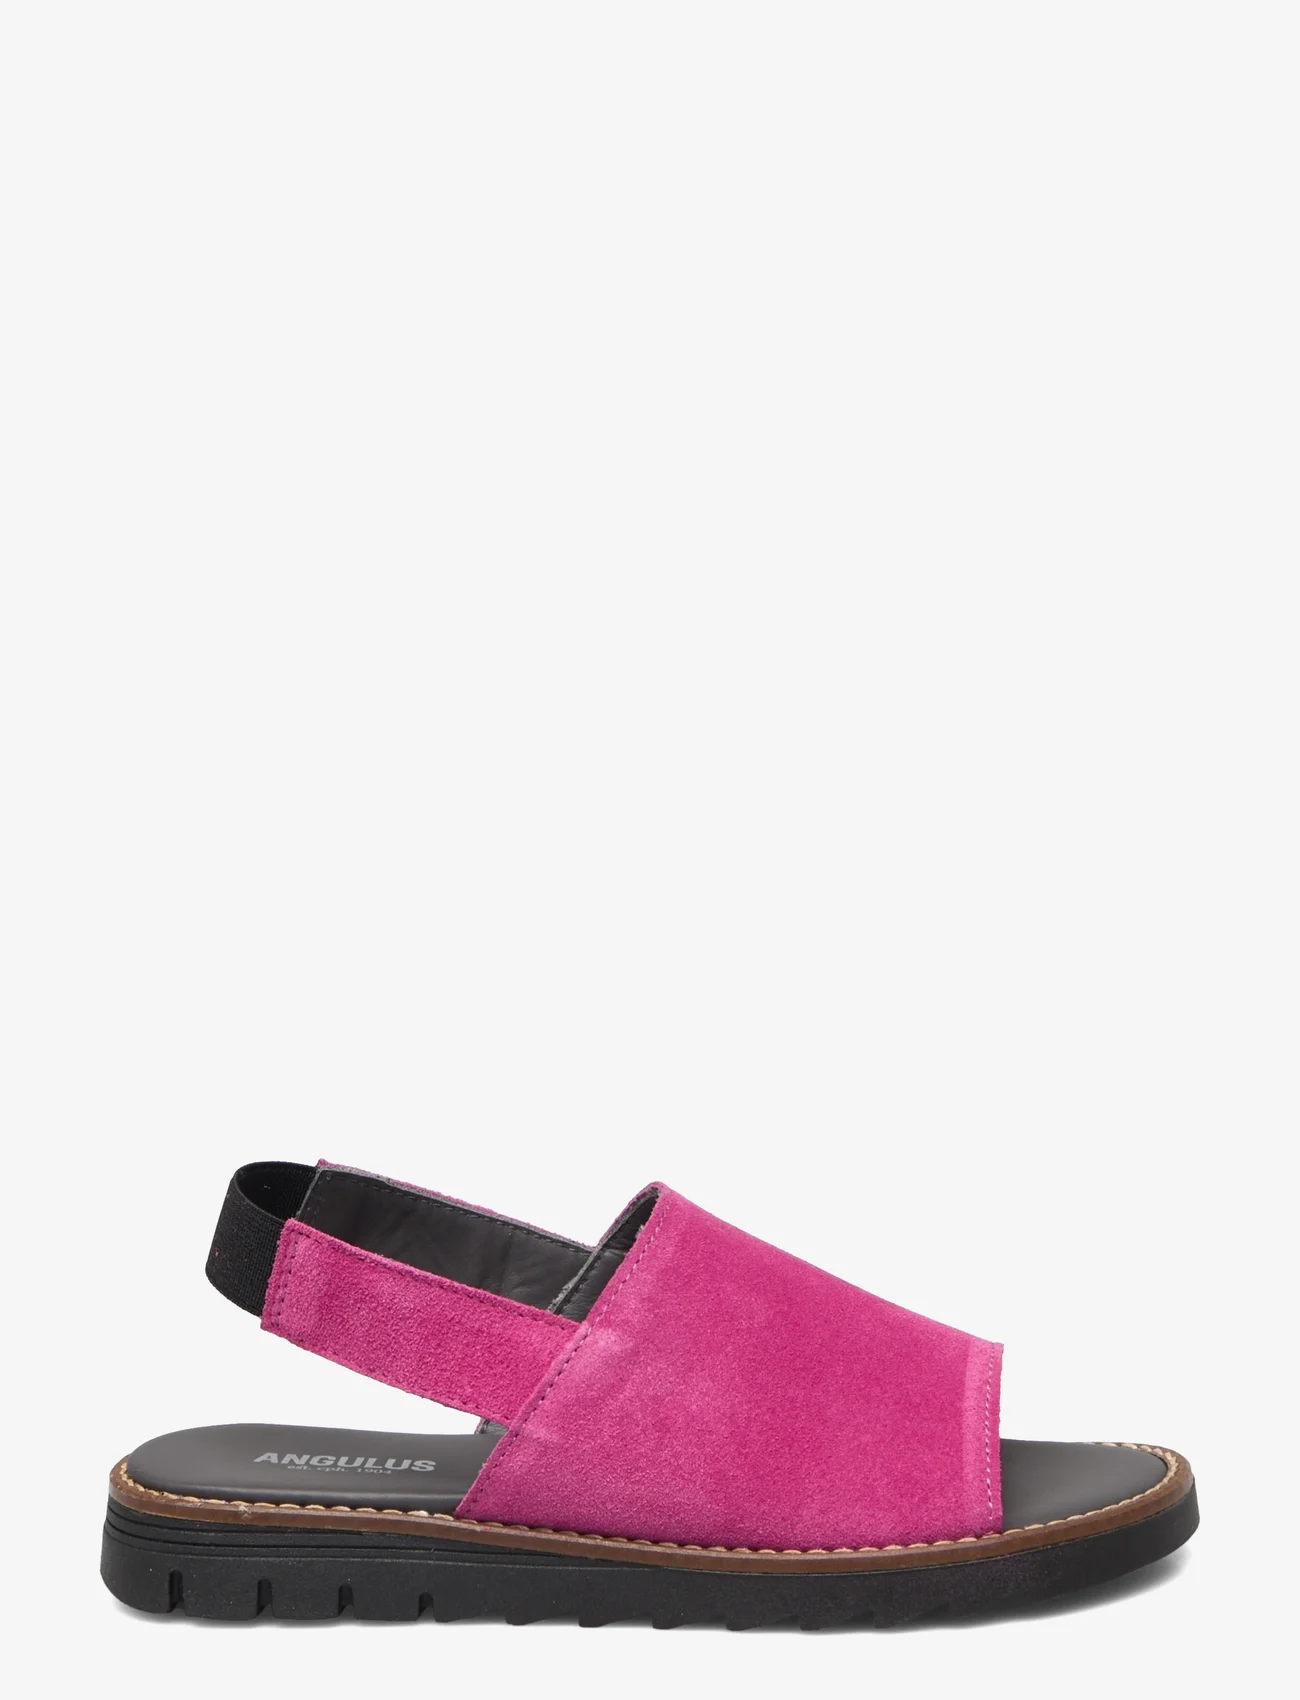 ANGULUS - Sandals - flat - open toe - op - sommarfynd - 1150 pink - 1